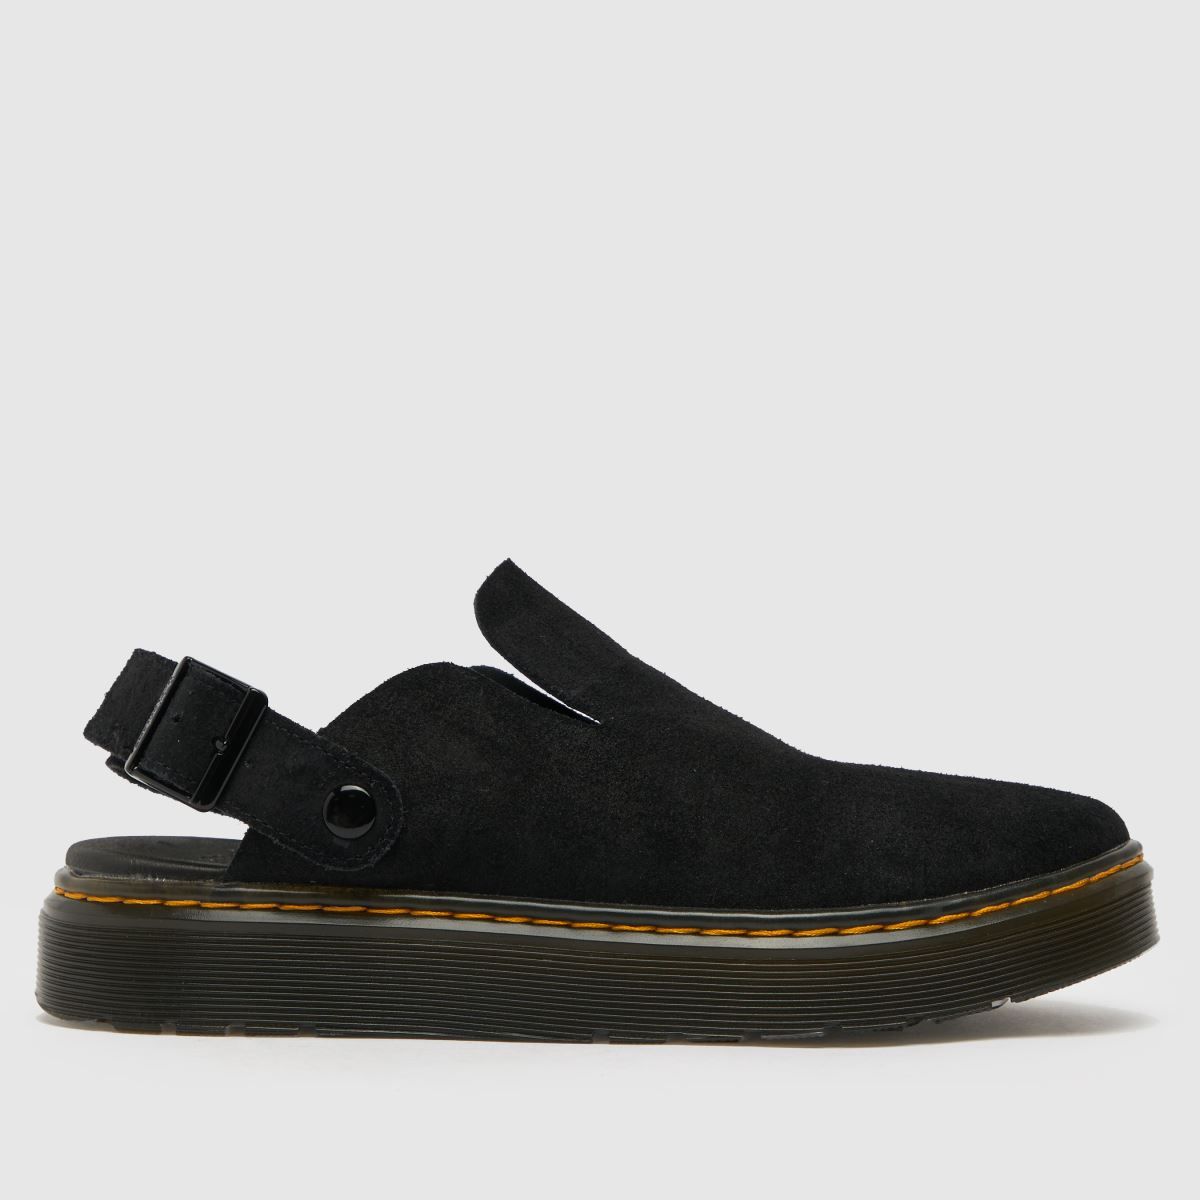 Dr Martens carlson mule sandals in black | Schuh